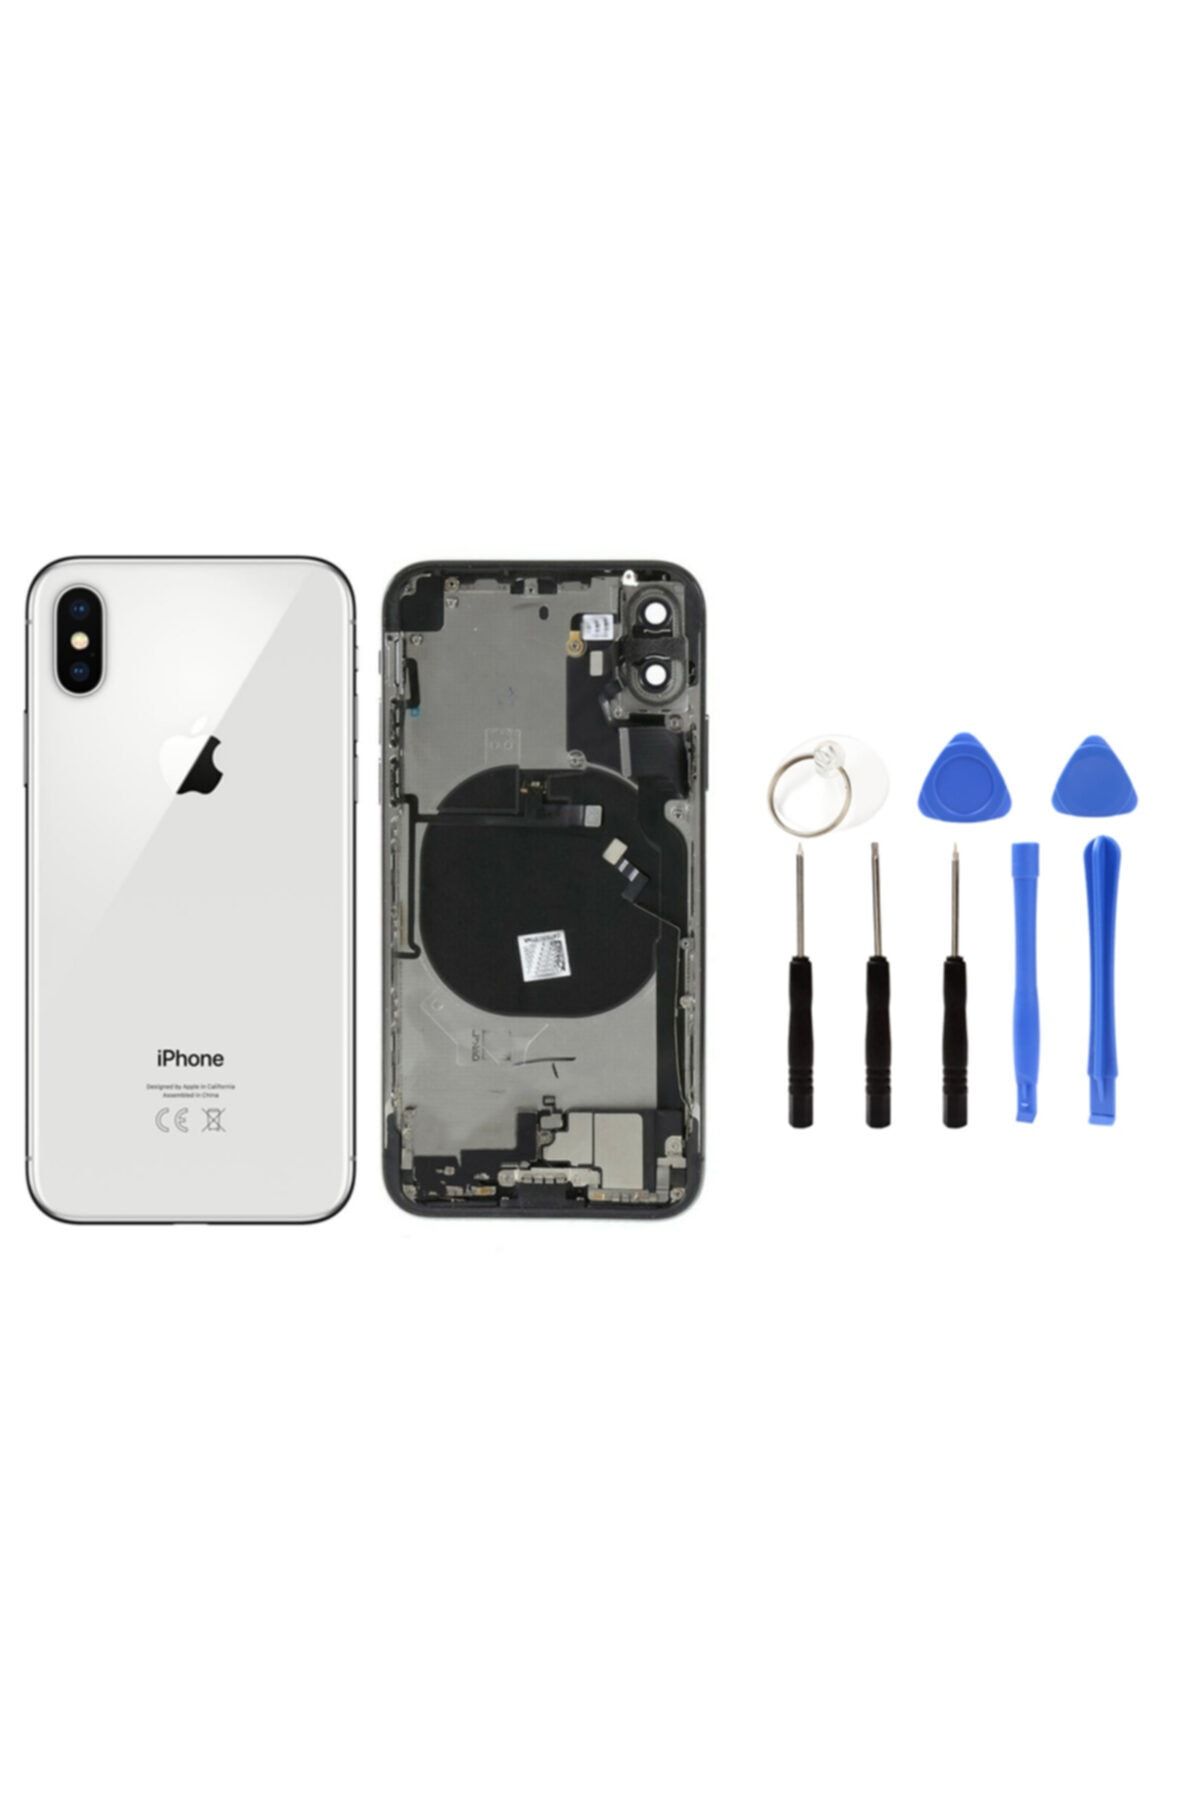 instatech Apple Iphone X Uyumlu Dolu Kasa + Montaj Seti Hediye - Silver